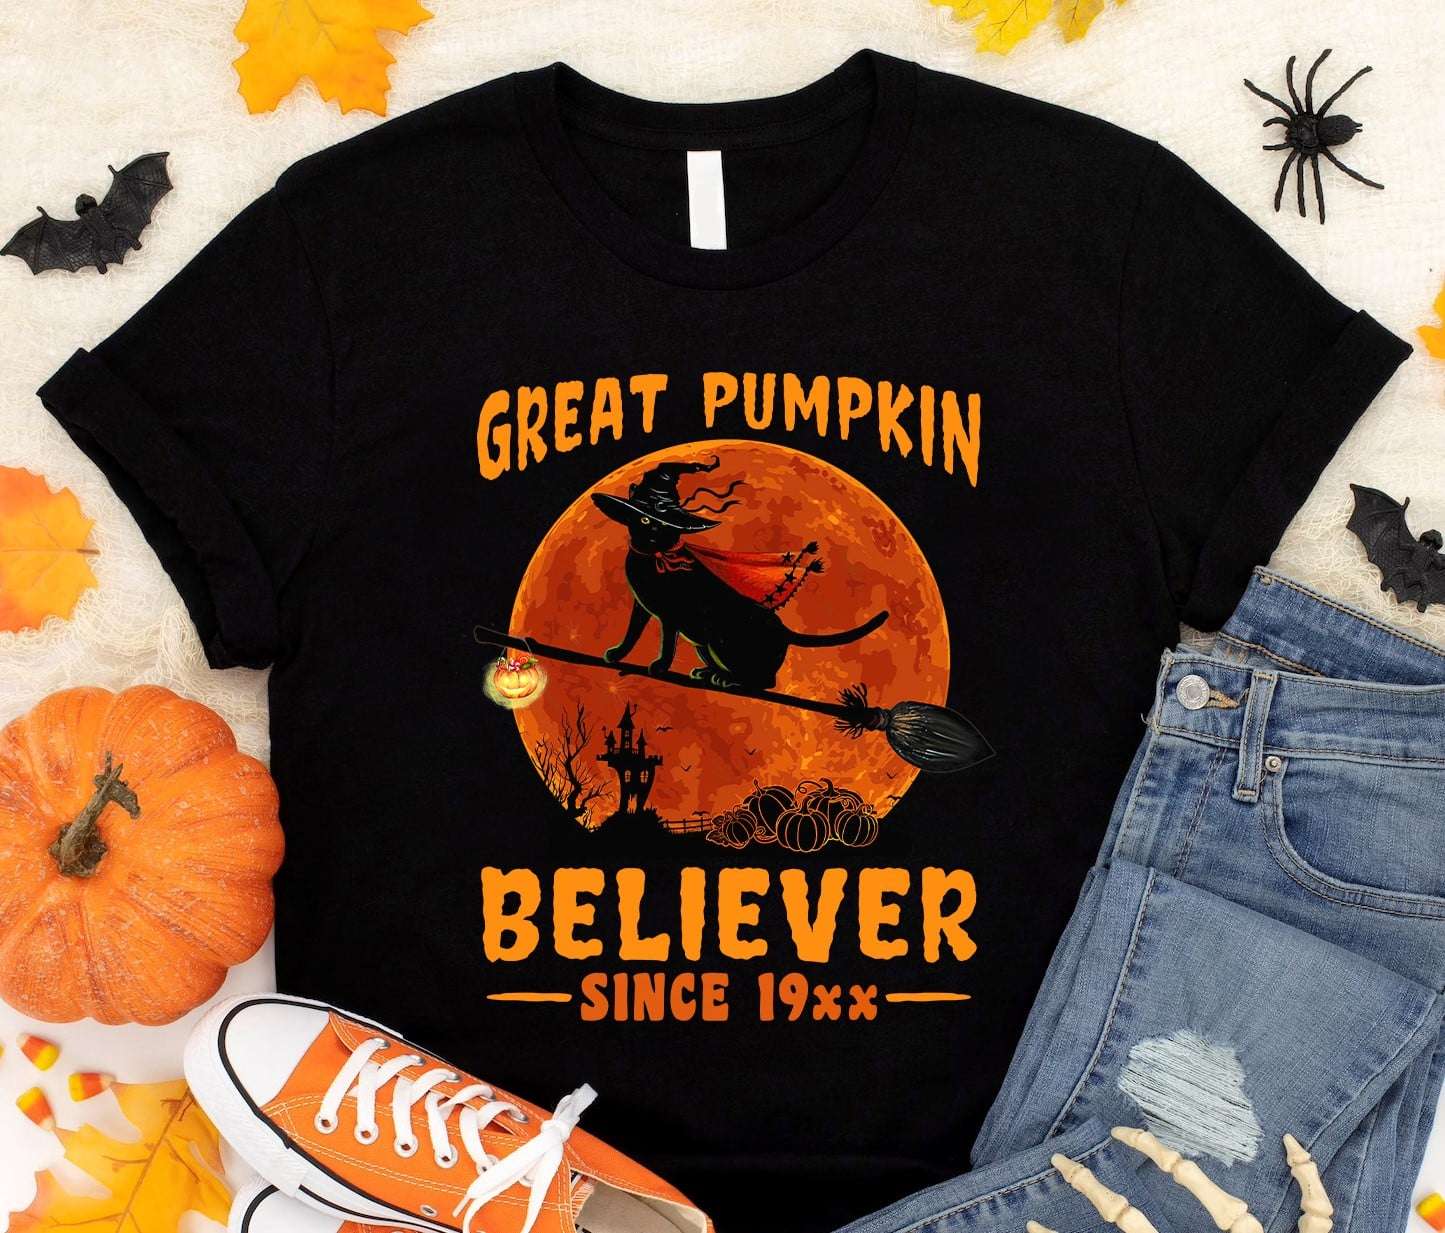 Great pumpkin believer - Black cat witch, halloween pumpkin, halloween witch costume